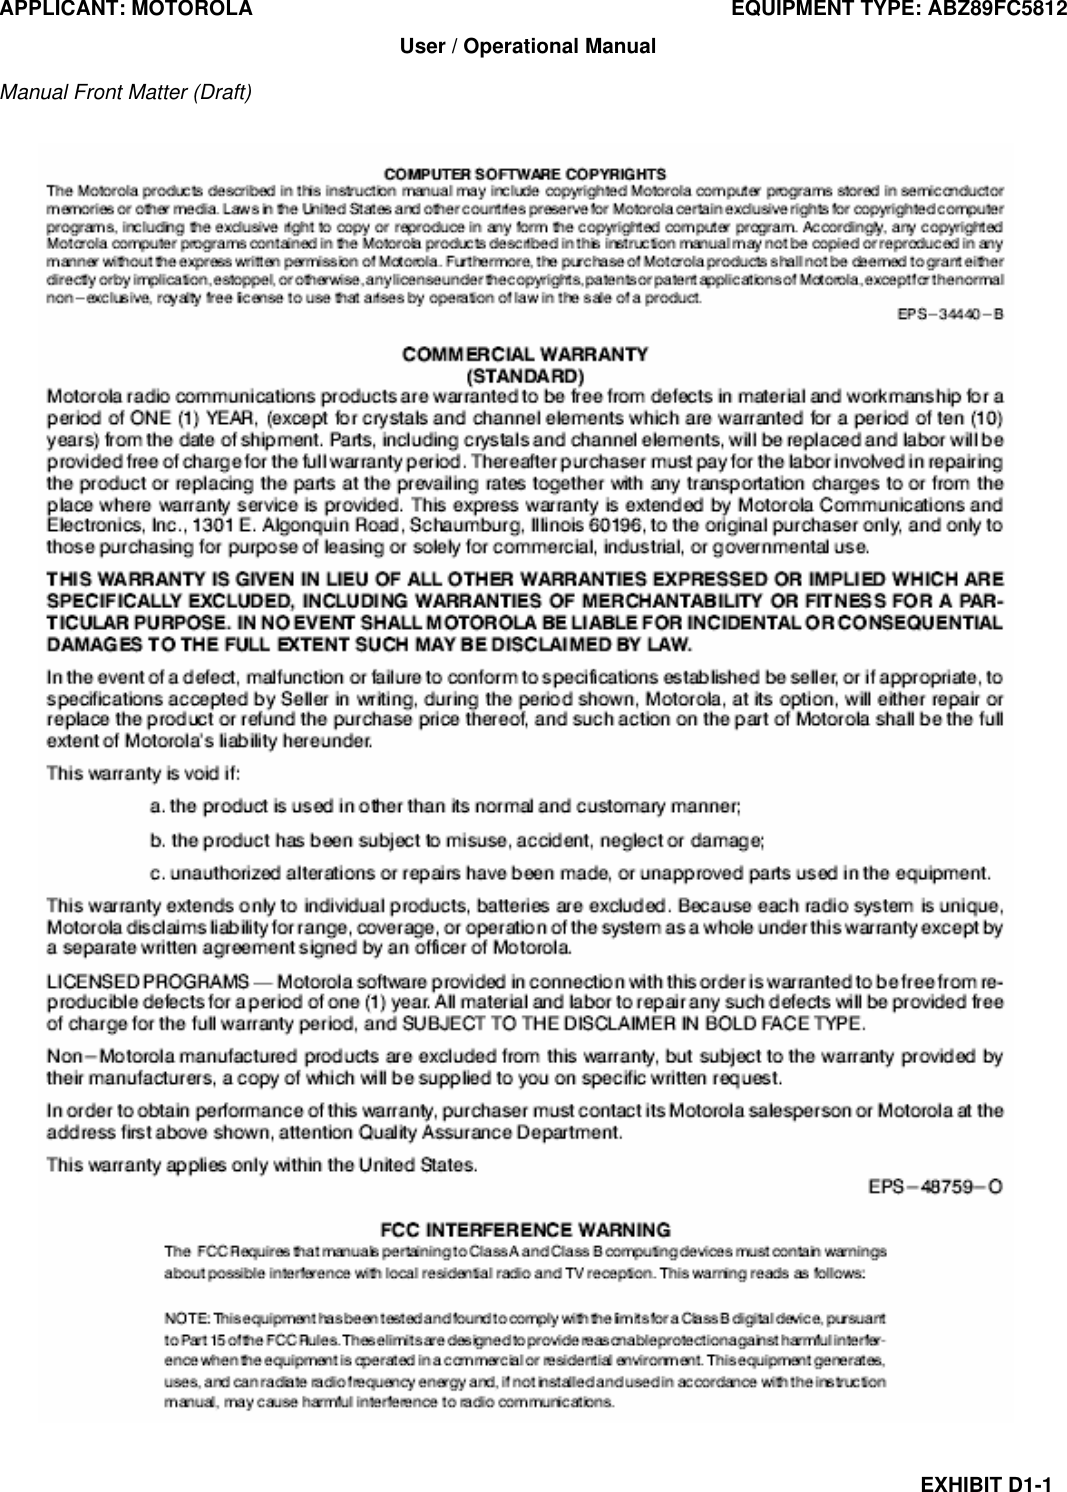 APPLICANT: MOTOROLA EQUIPMENT TYPE: ABZ89FC5812 EXHIBIT D1-1 User / Operational Manual  Manual Front Matter (Draft) 